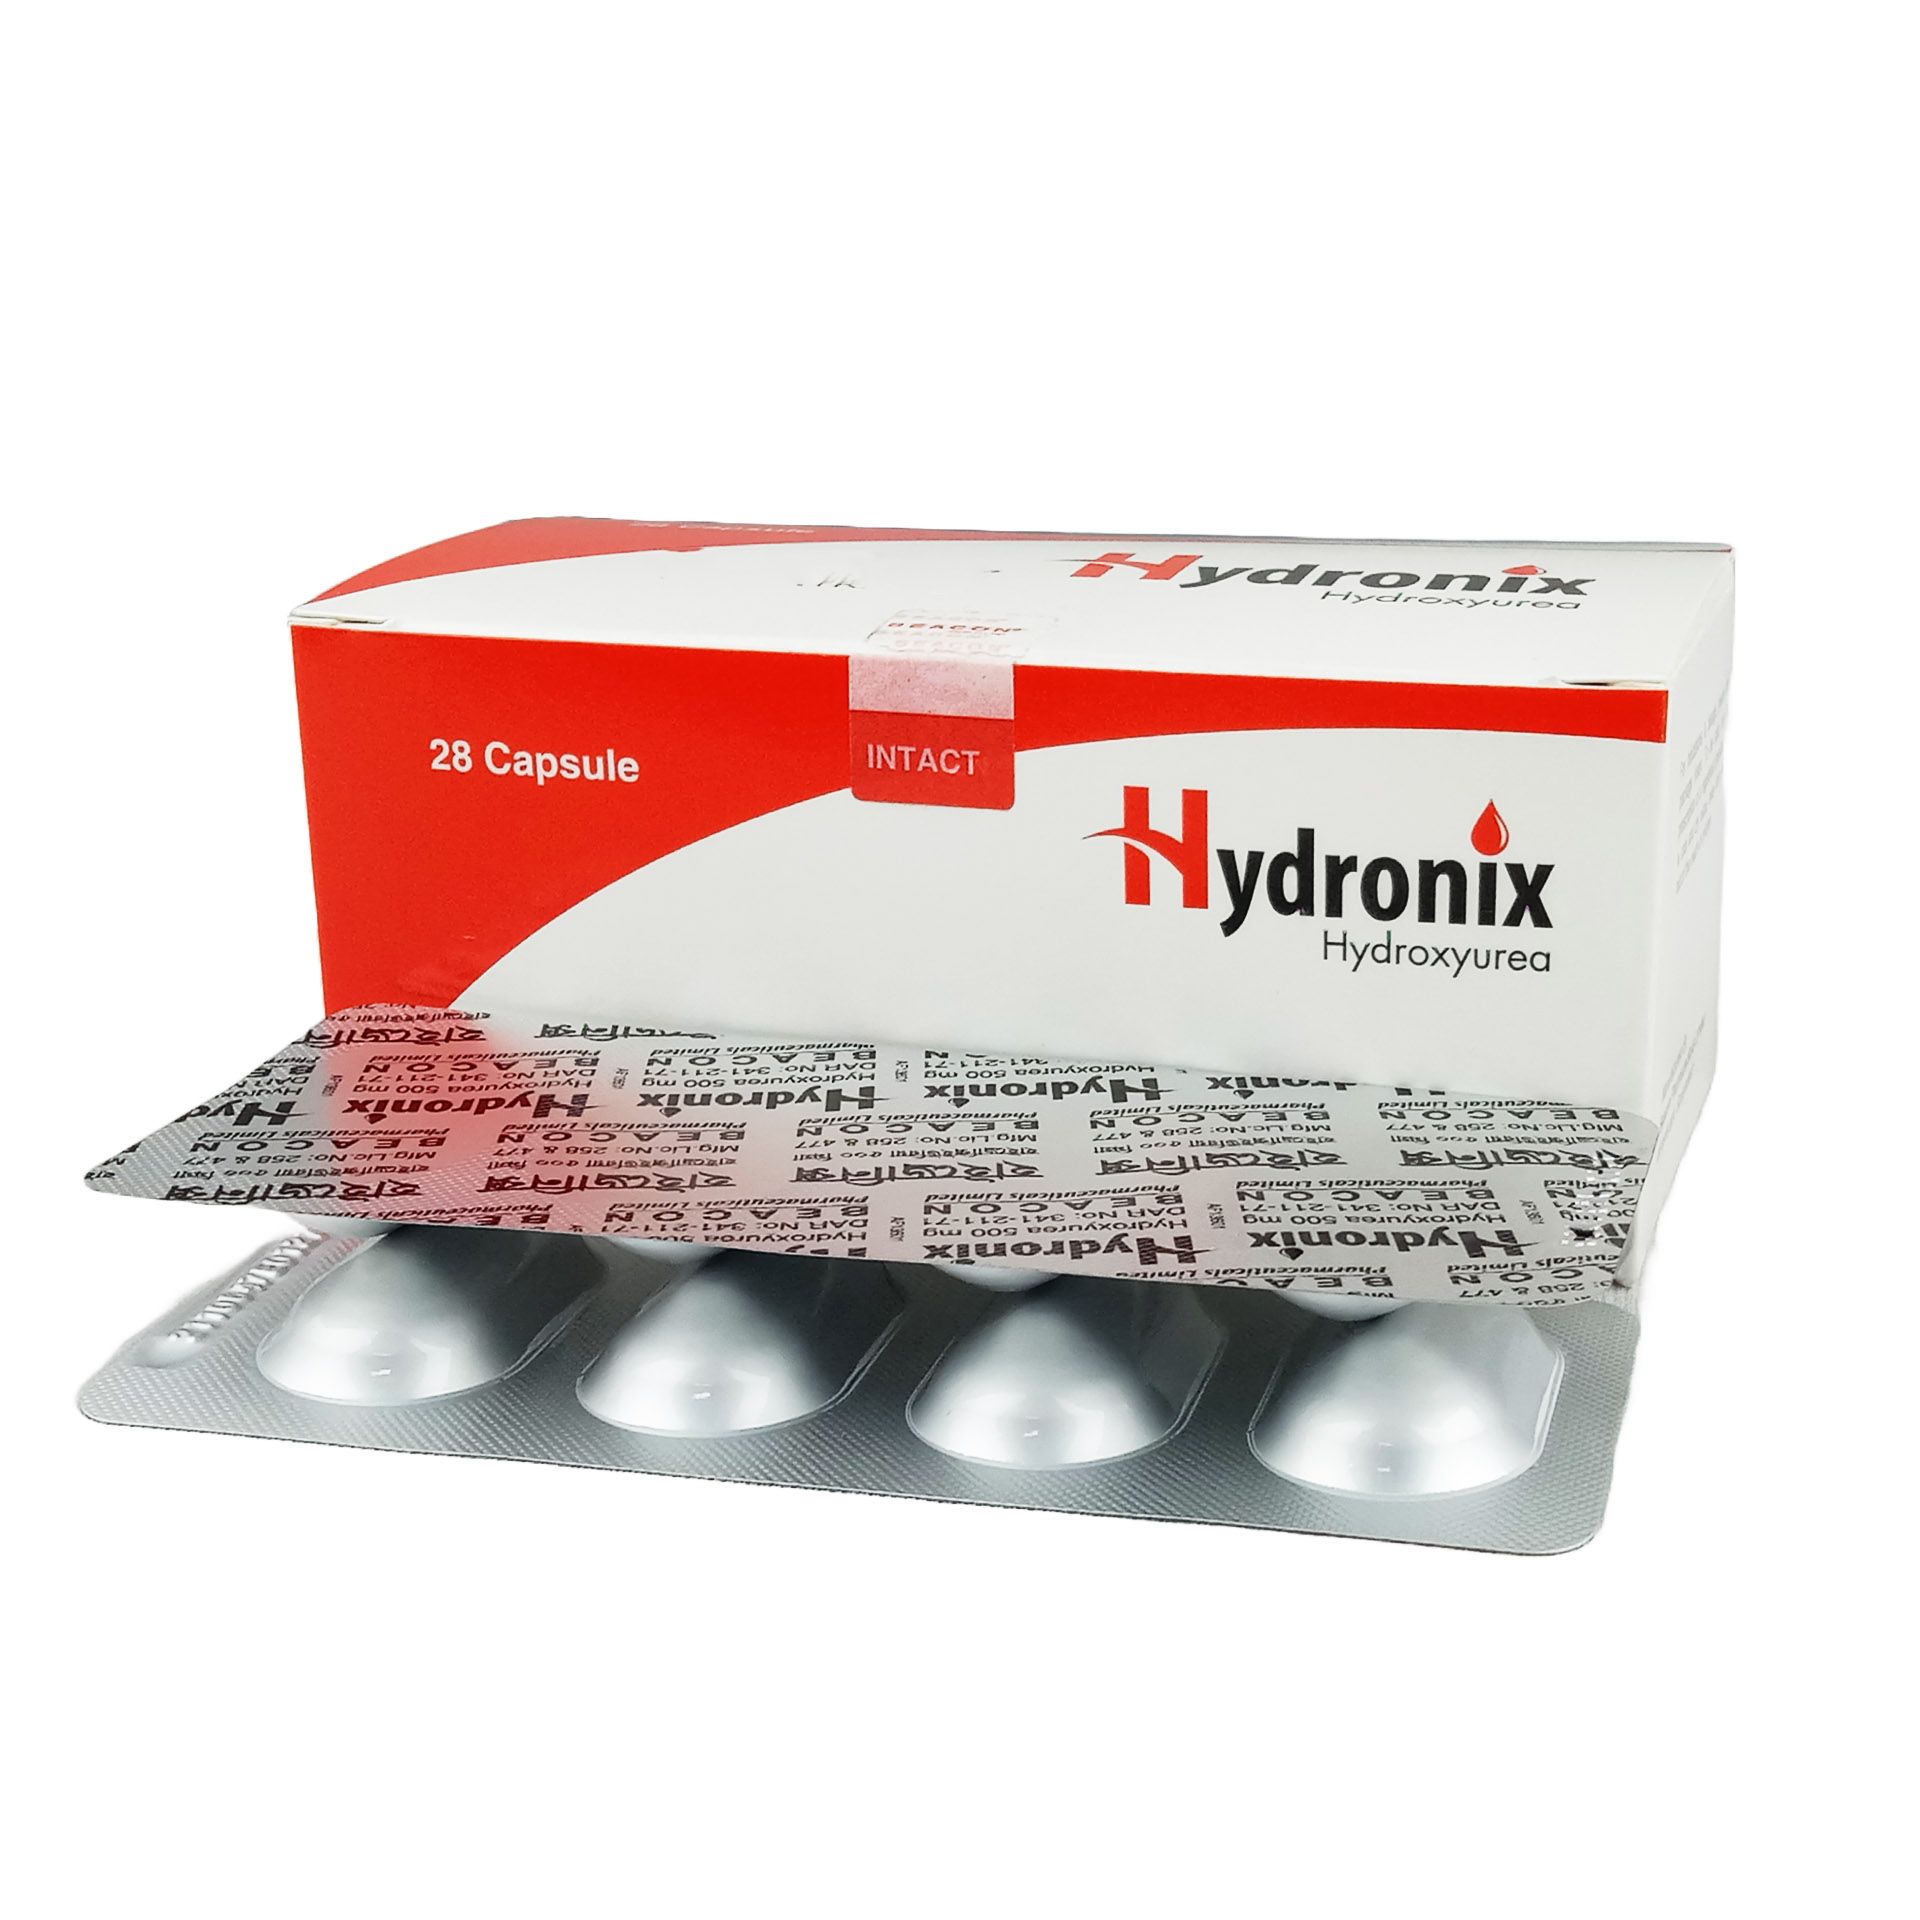 Hydronix 500mg Capsule